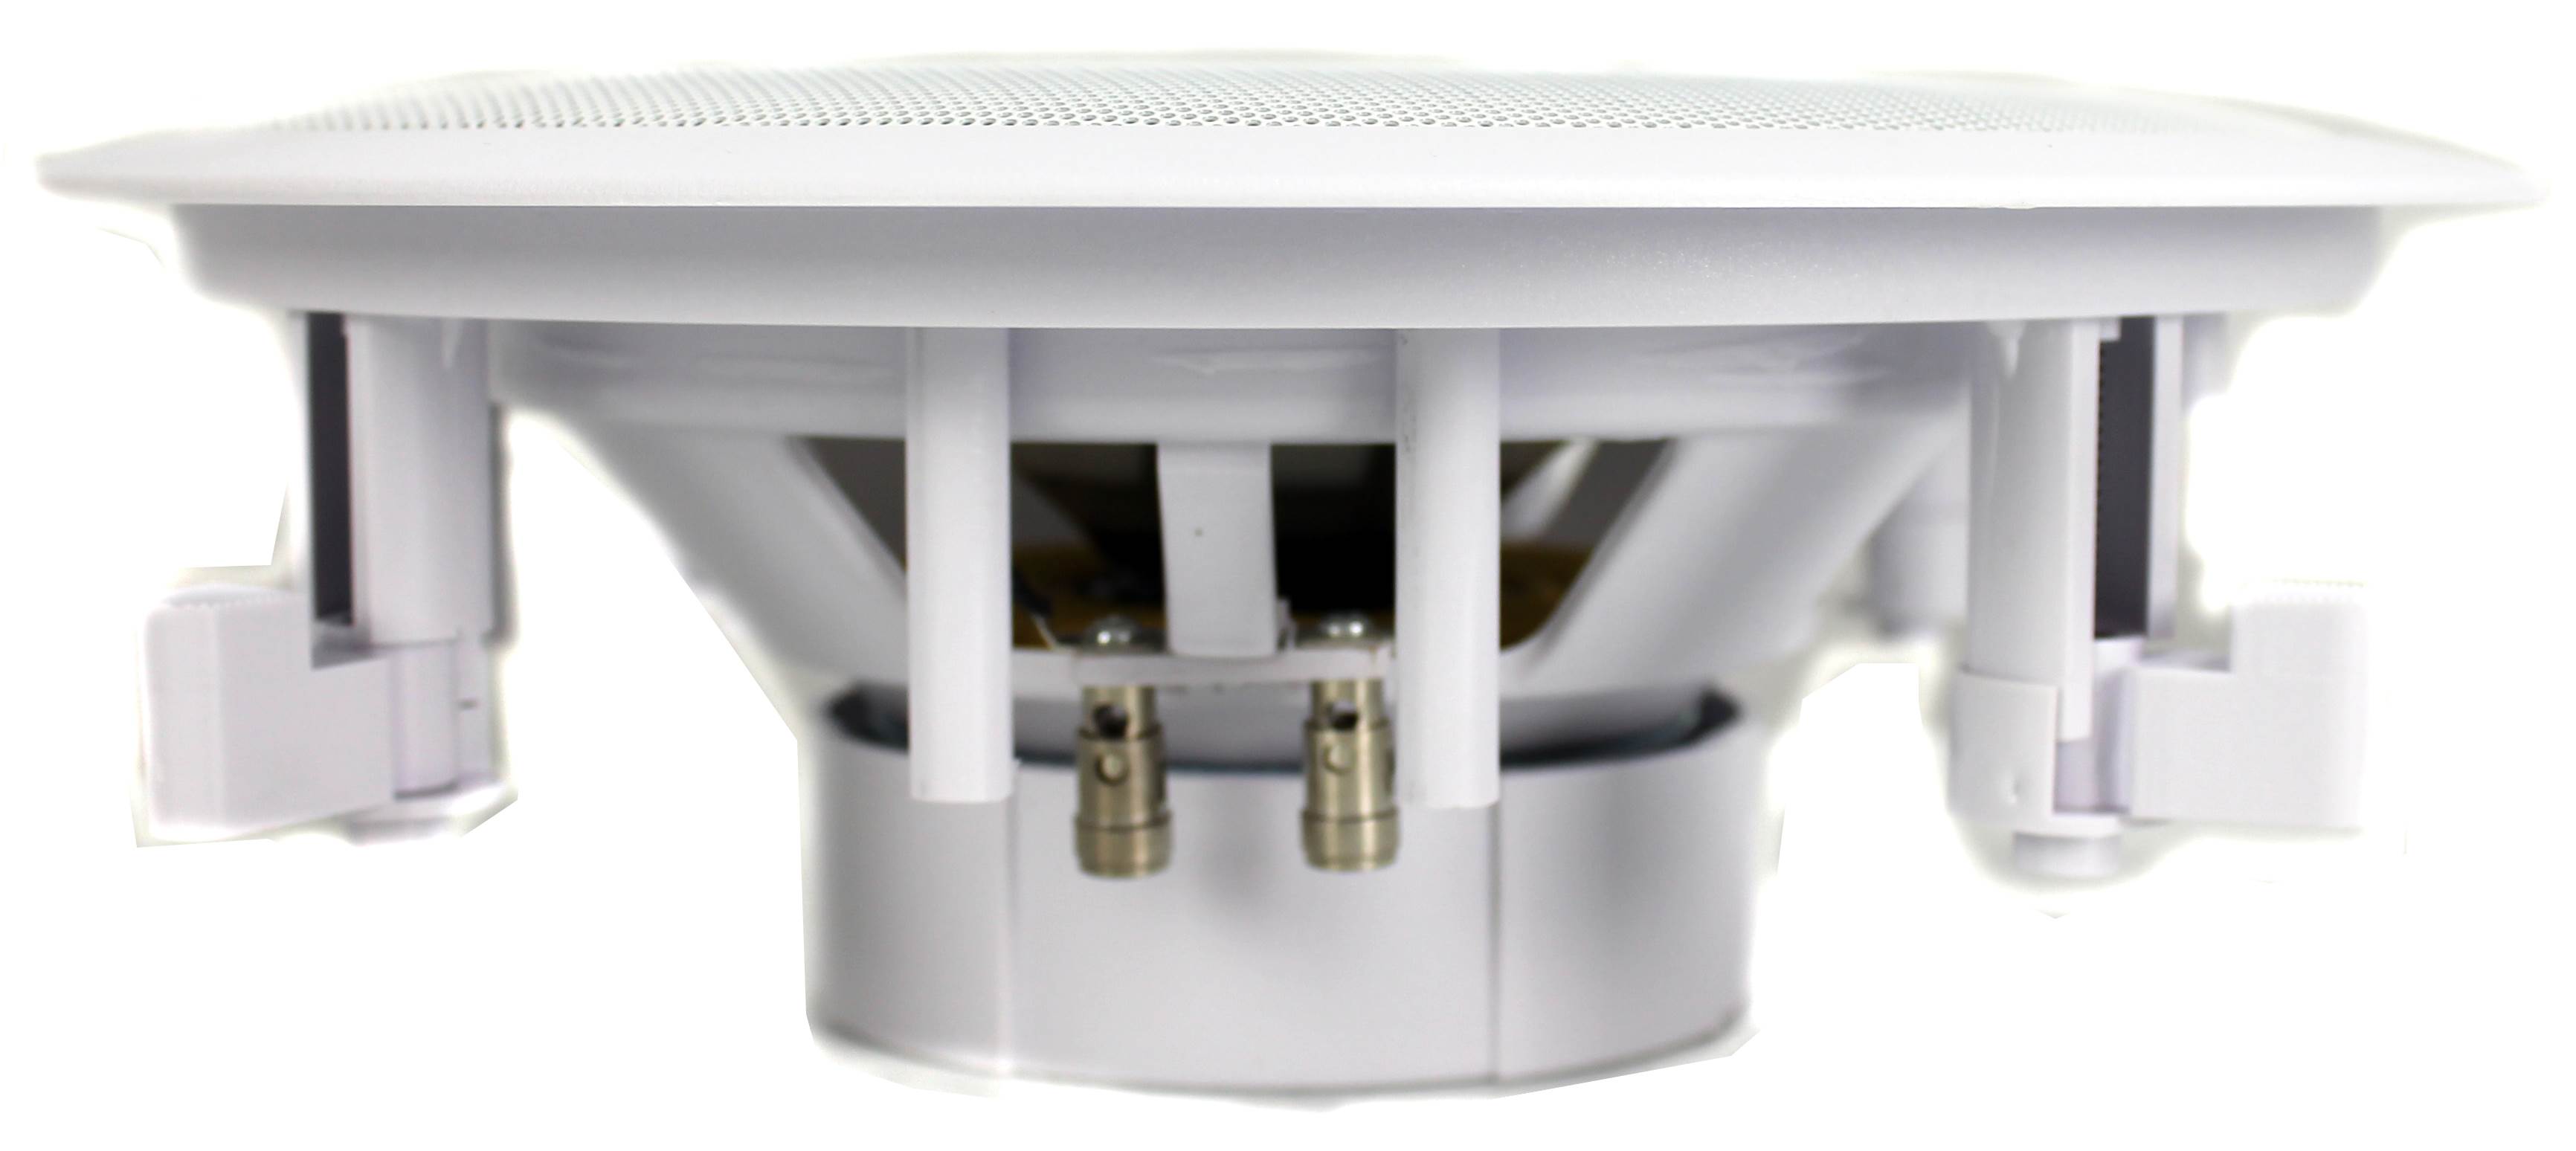 Pyle PWRC82 8 Inch 2 Way Indoor/Outdoor Waterproof Ceiling Speakers, (3 Pack) - image 5 of 6